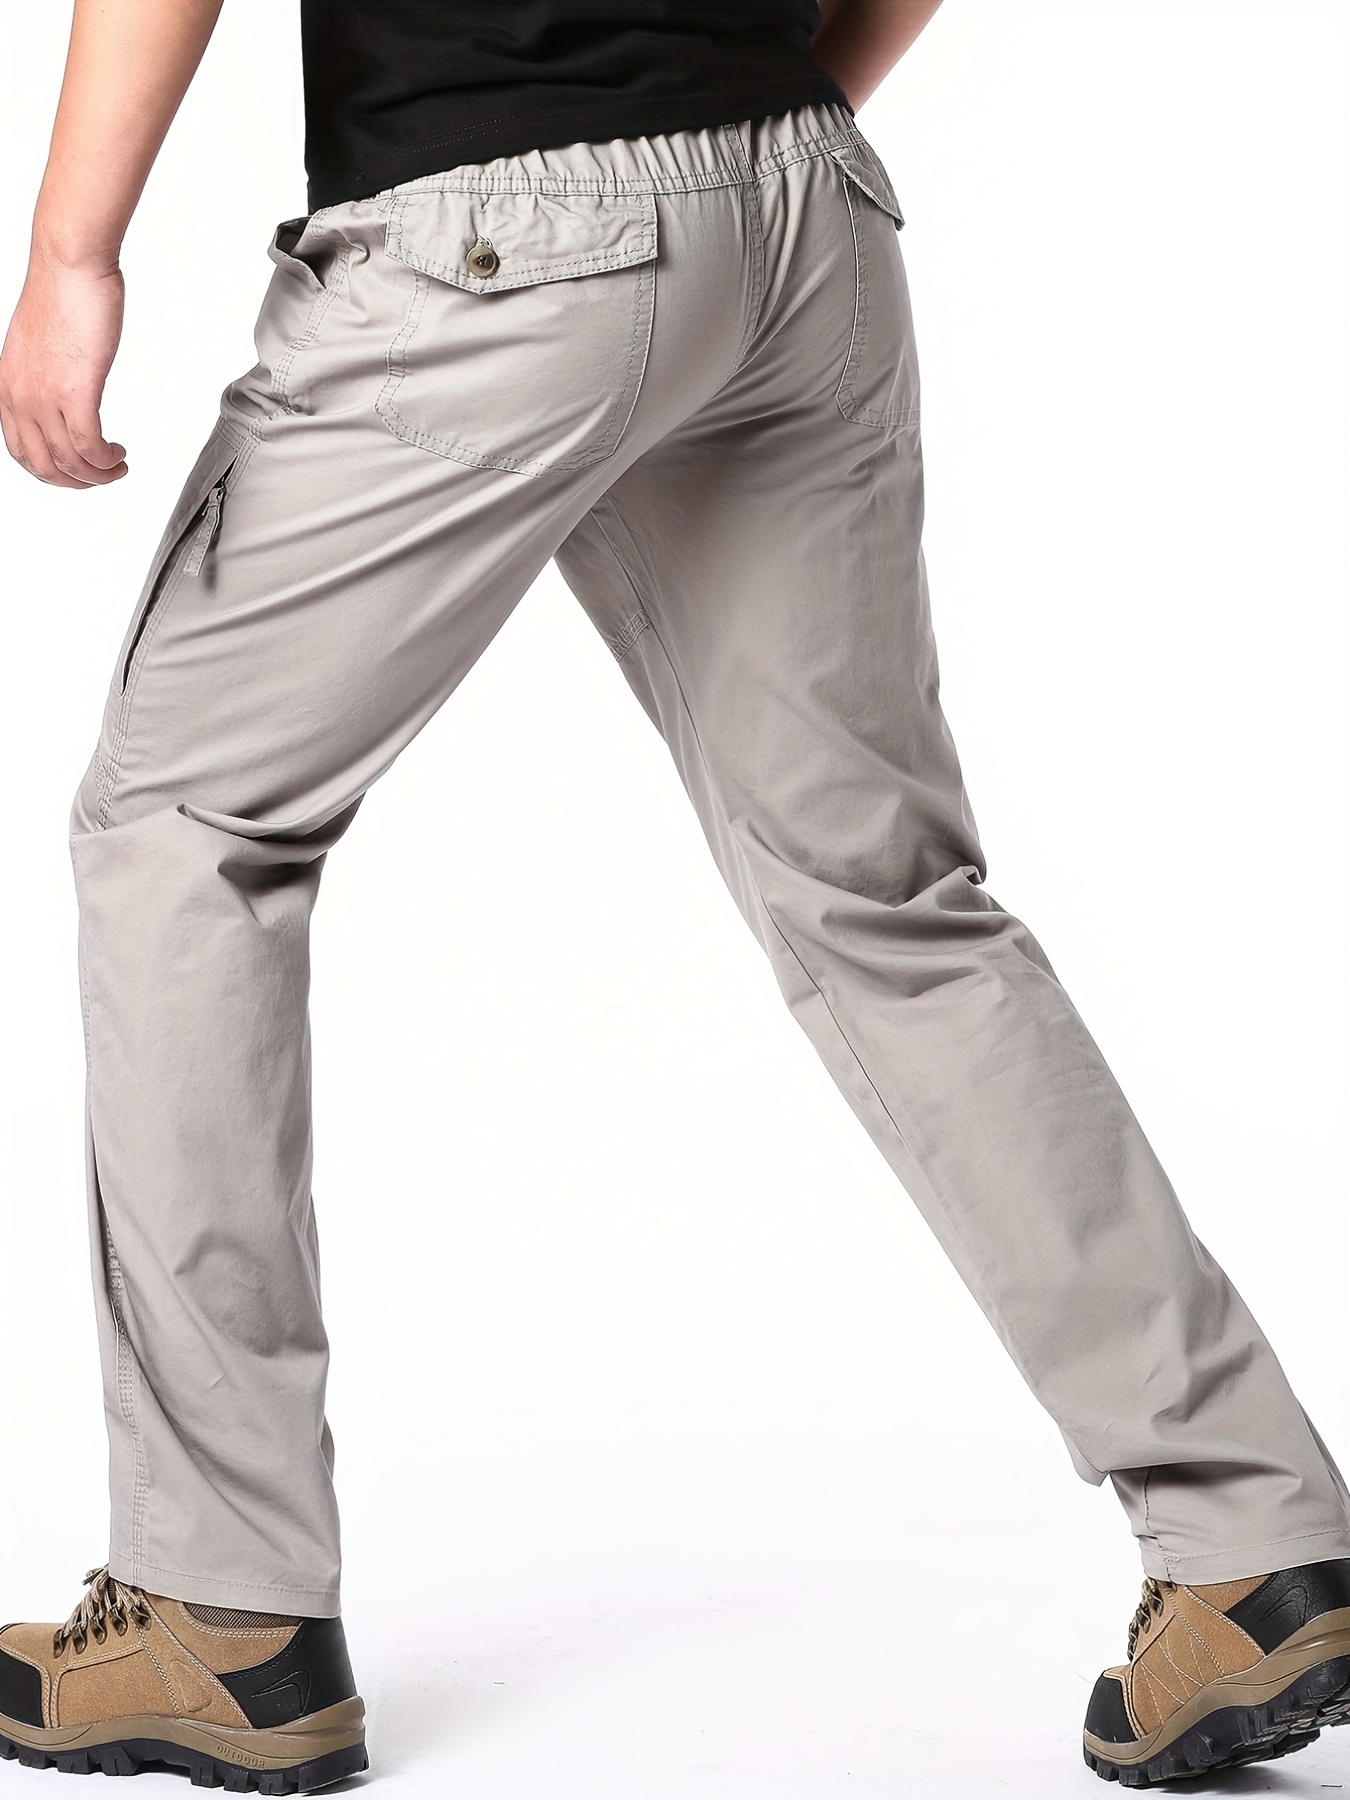 En Oferta Pantalón Columbia 100% Calidad  Pantalones columbia, Pantalones,  Ropa masculina